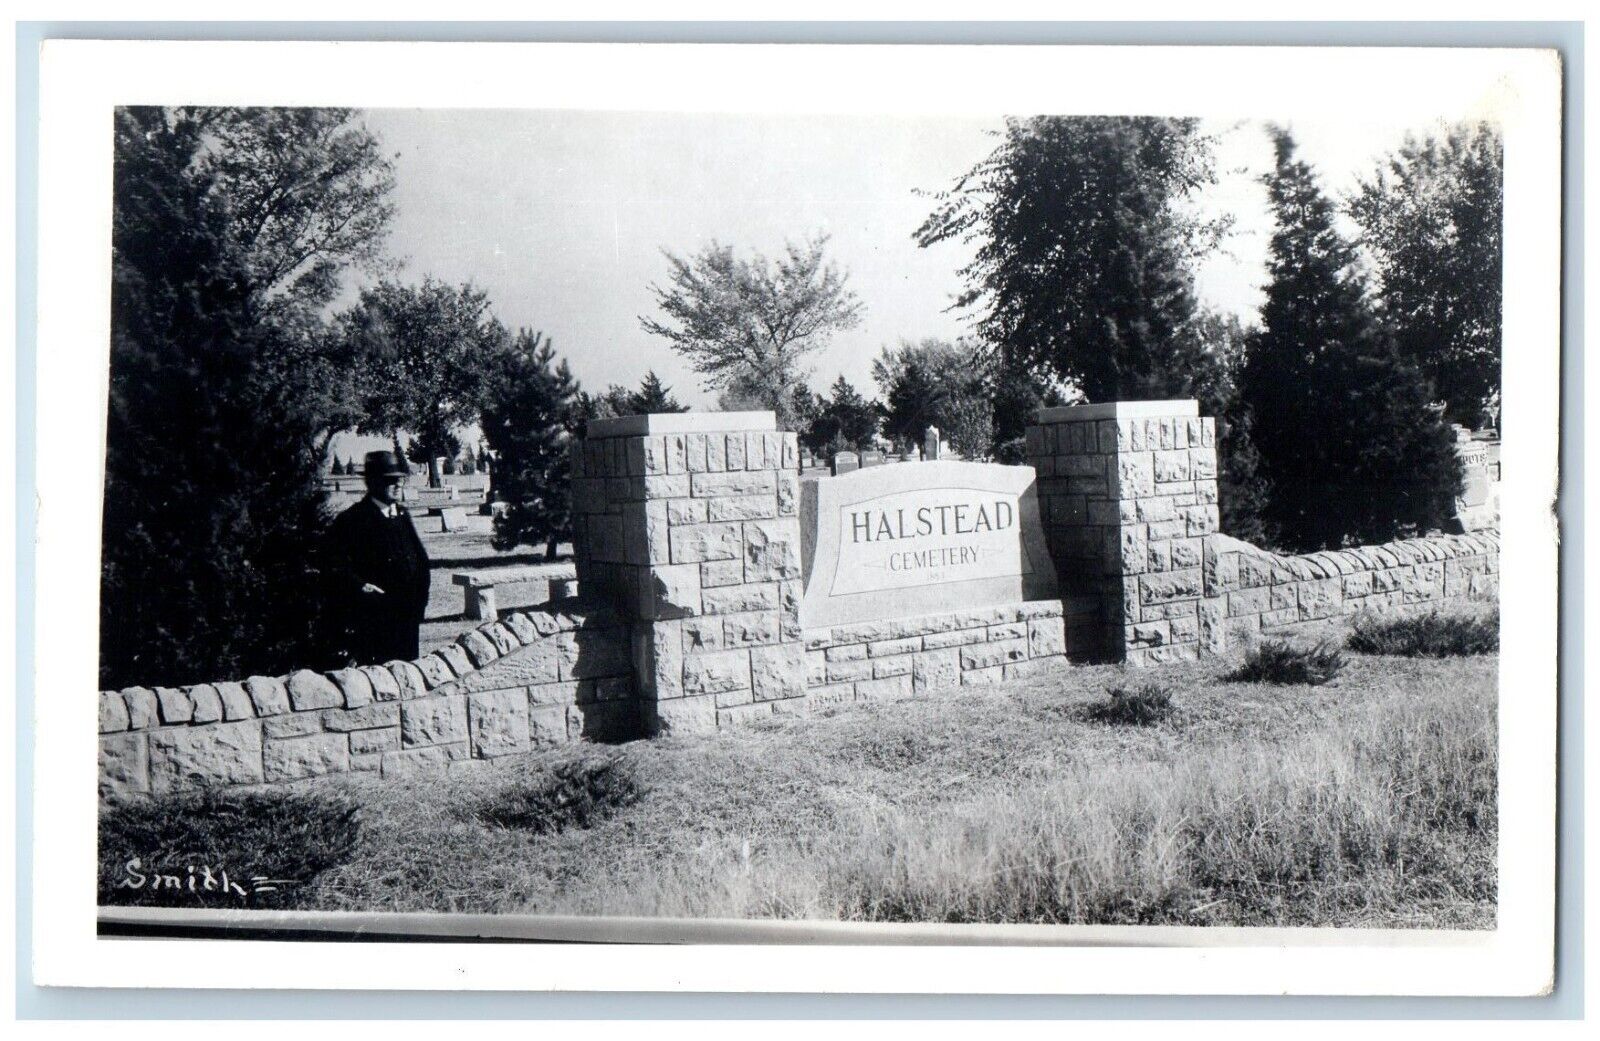 Halstead Kansas KS Postcard RPPC Photo Halstead Cemetery Smith c1930's Vintage